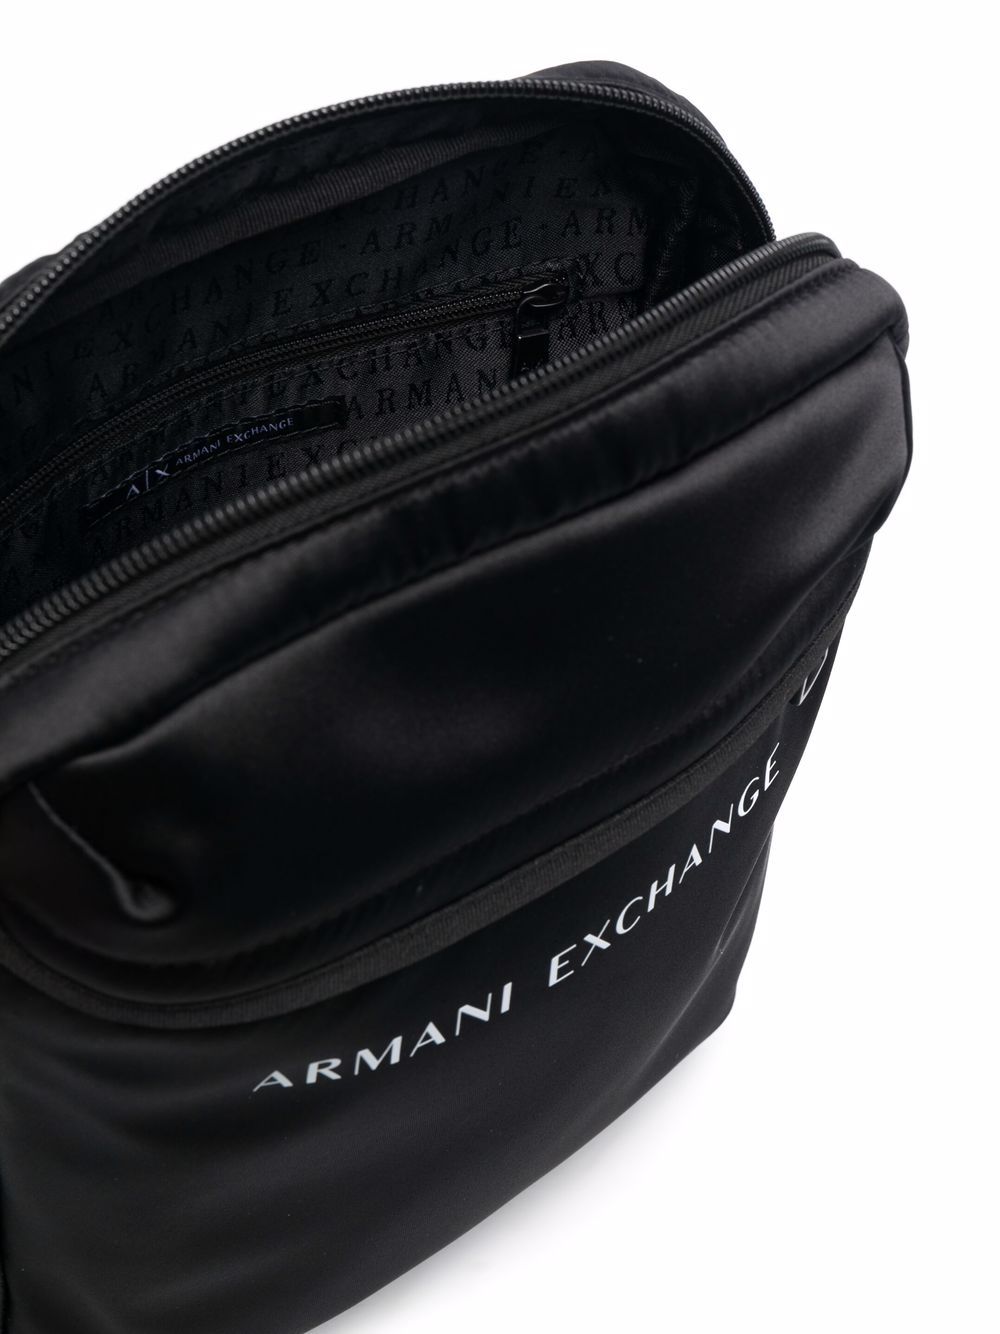 фото Armani exchange сумка-мессенджер с логотипом